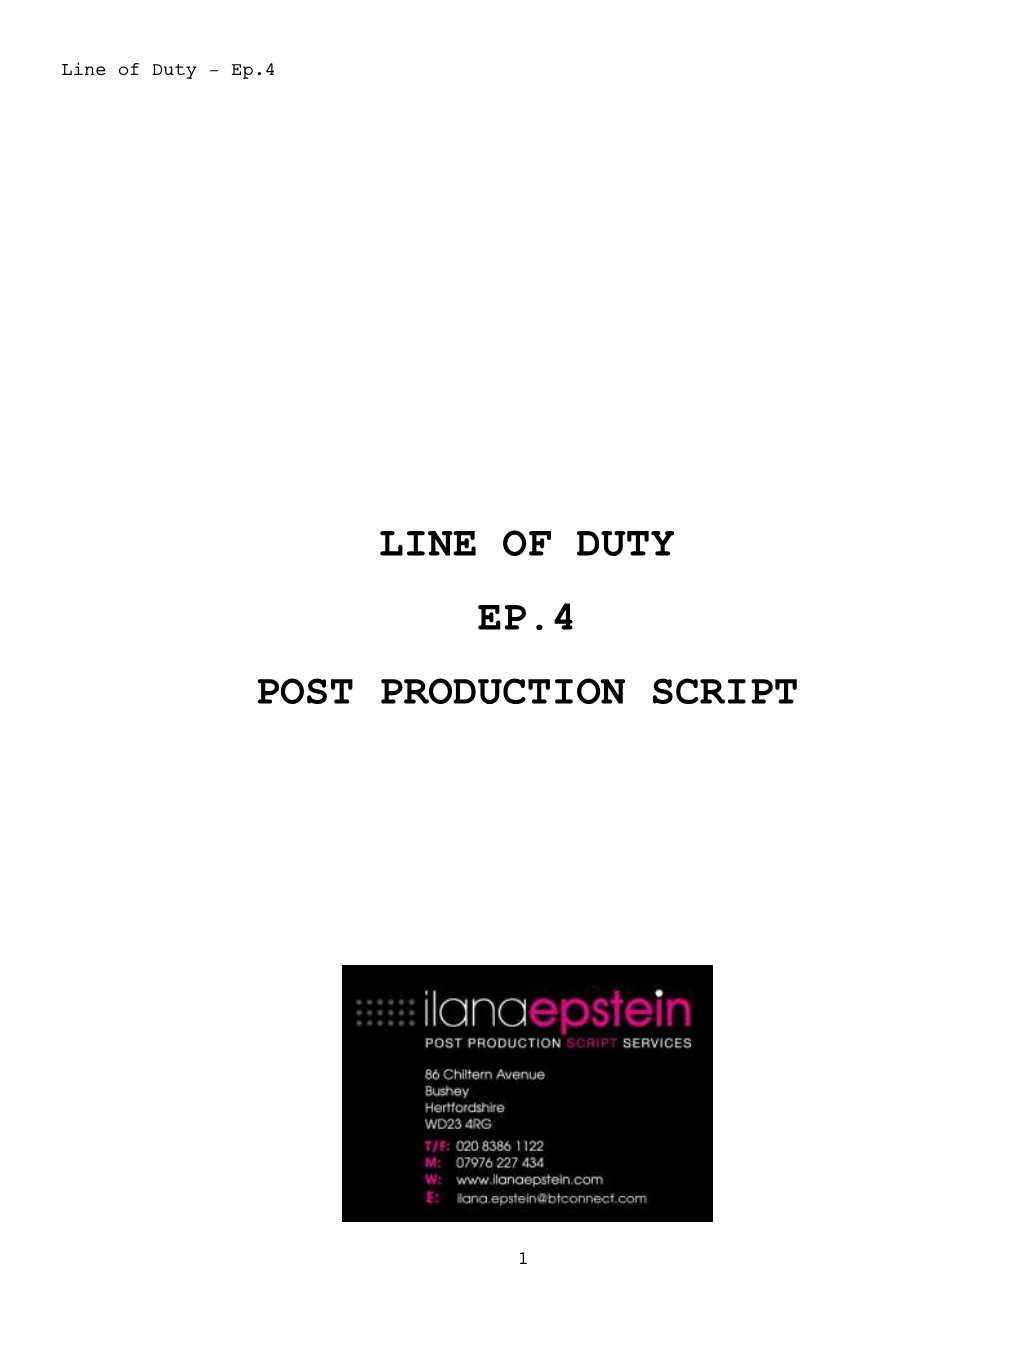 Line of Duty Ep.4 Post Production Script